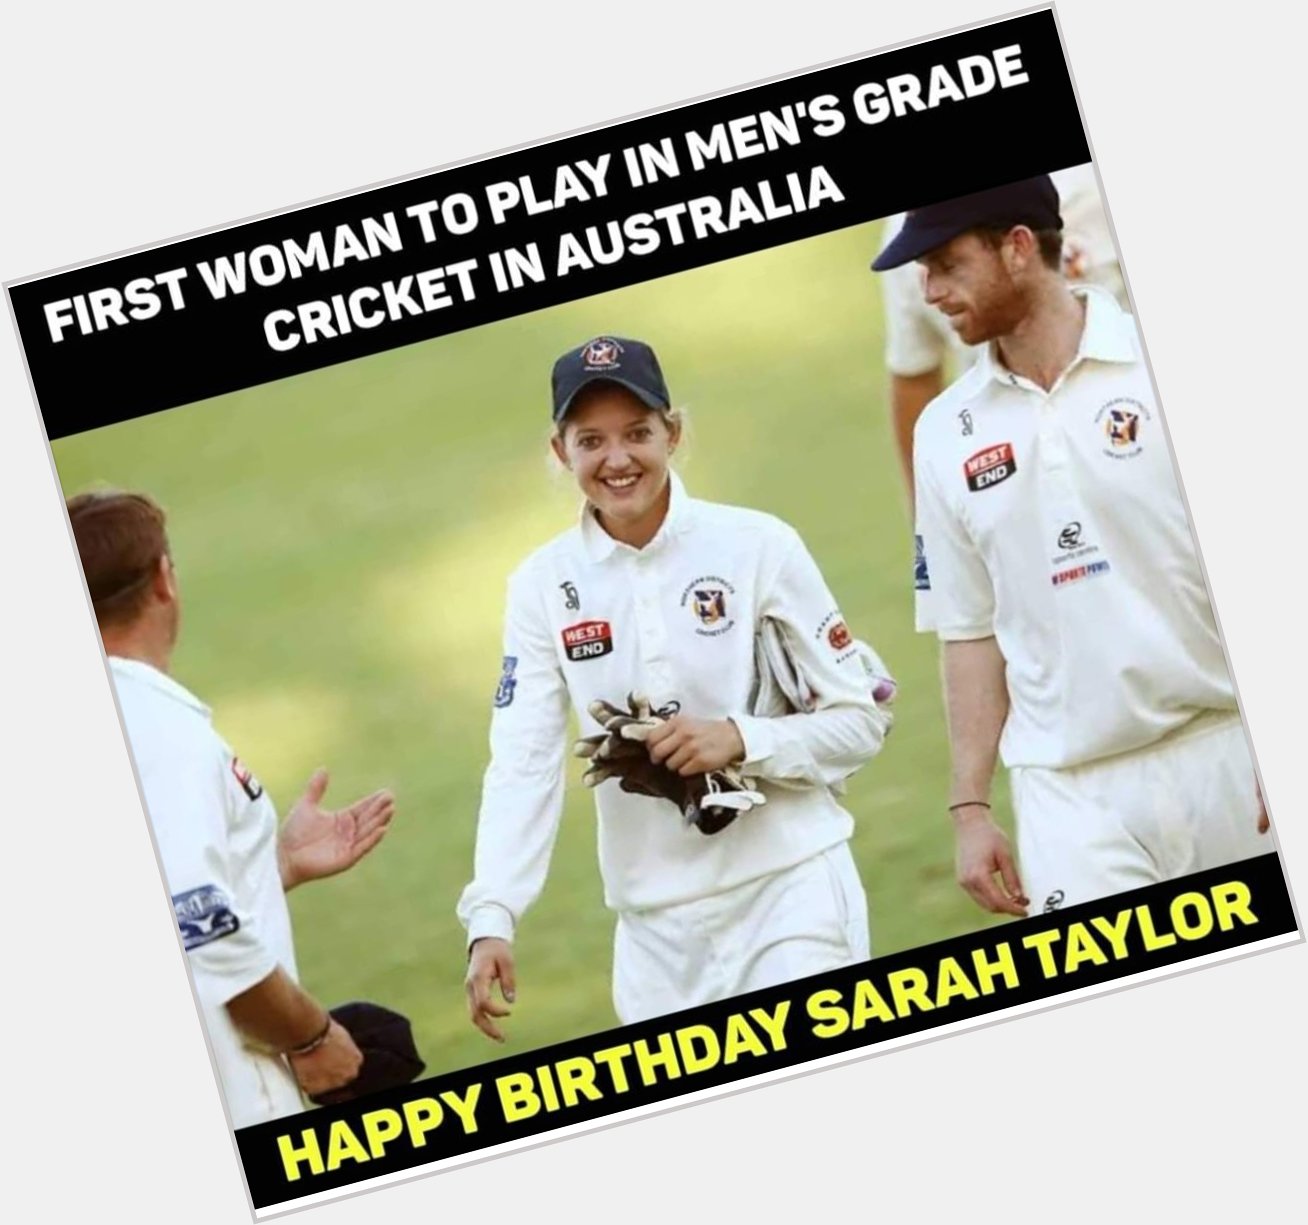 Happy birthday sarah taylor  